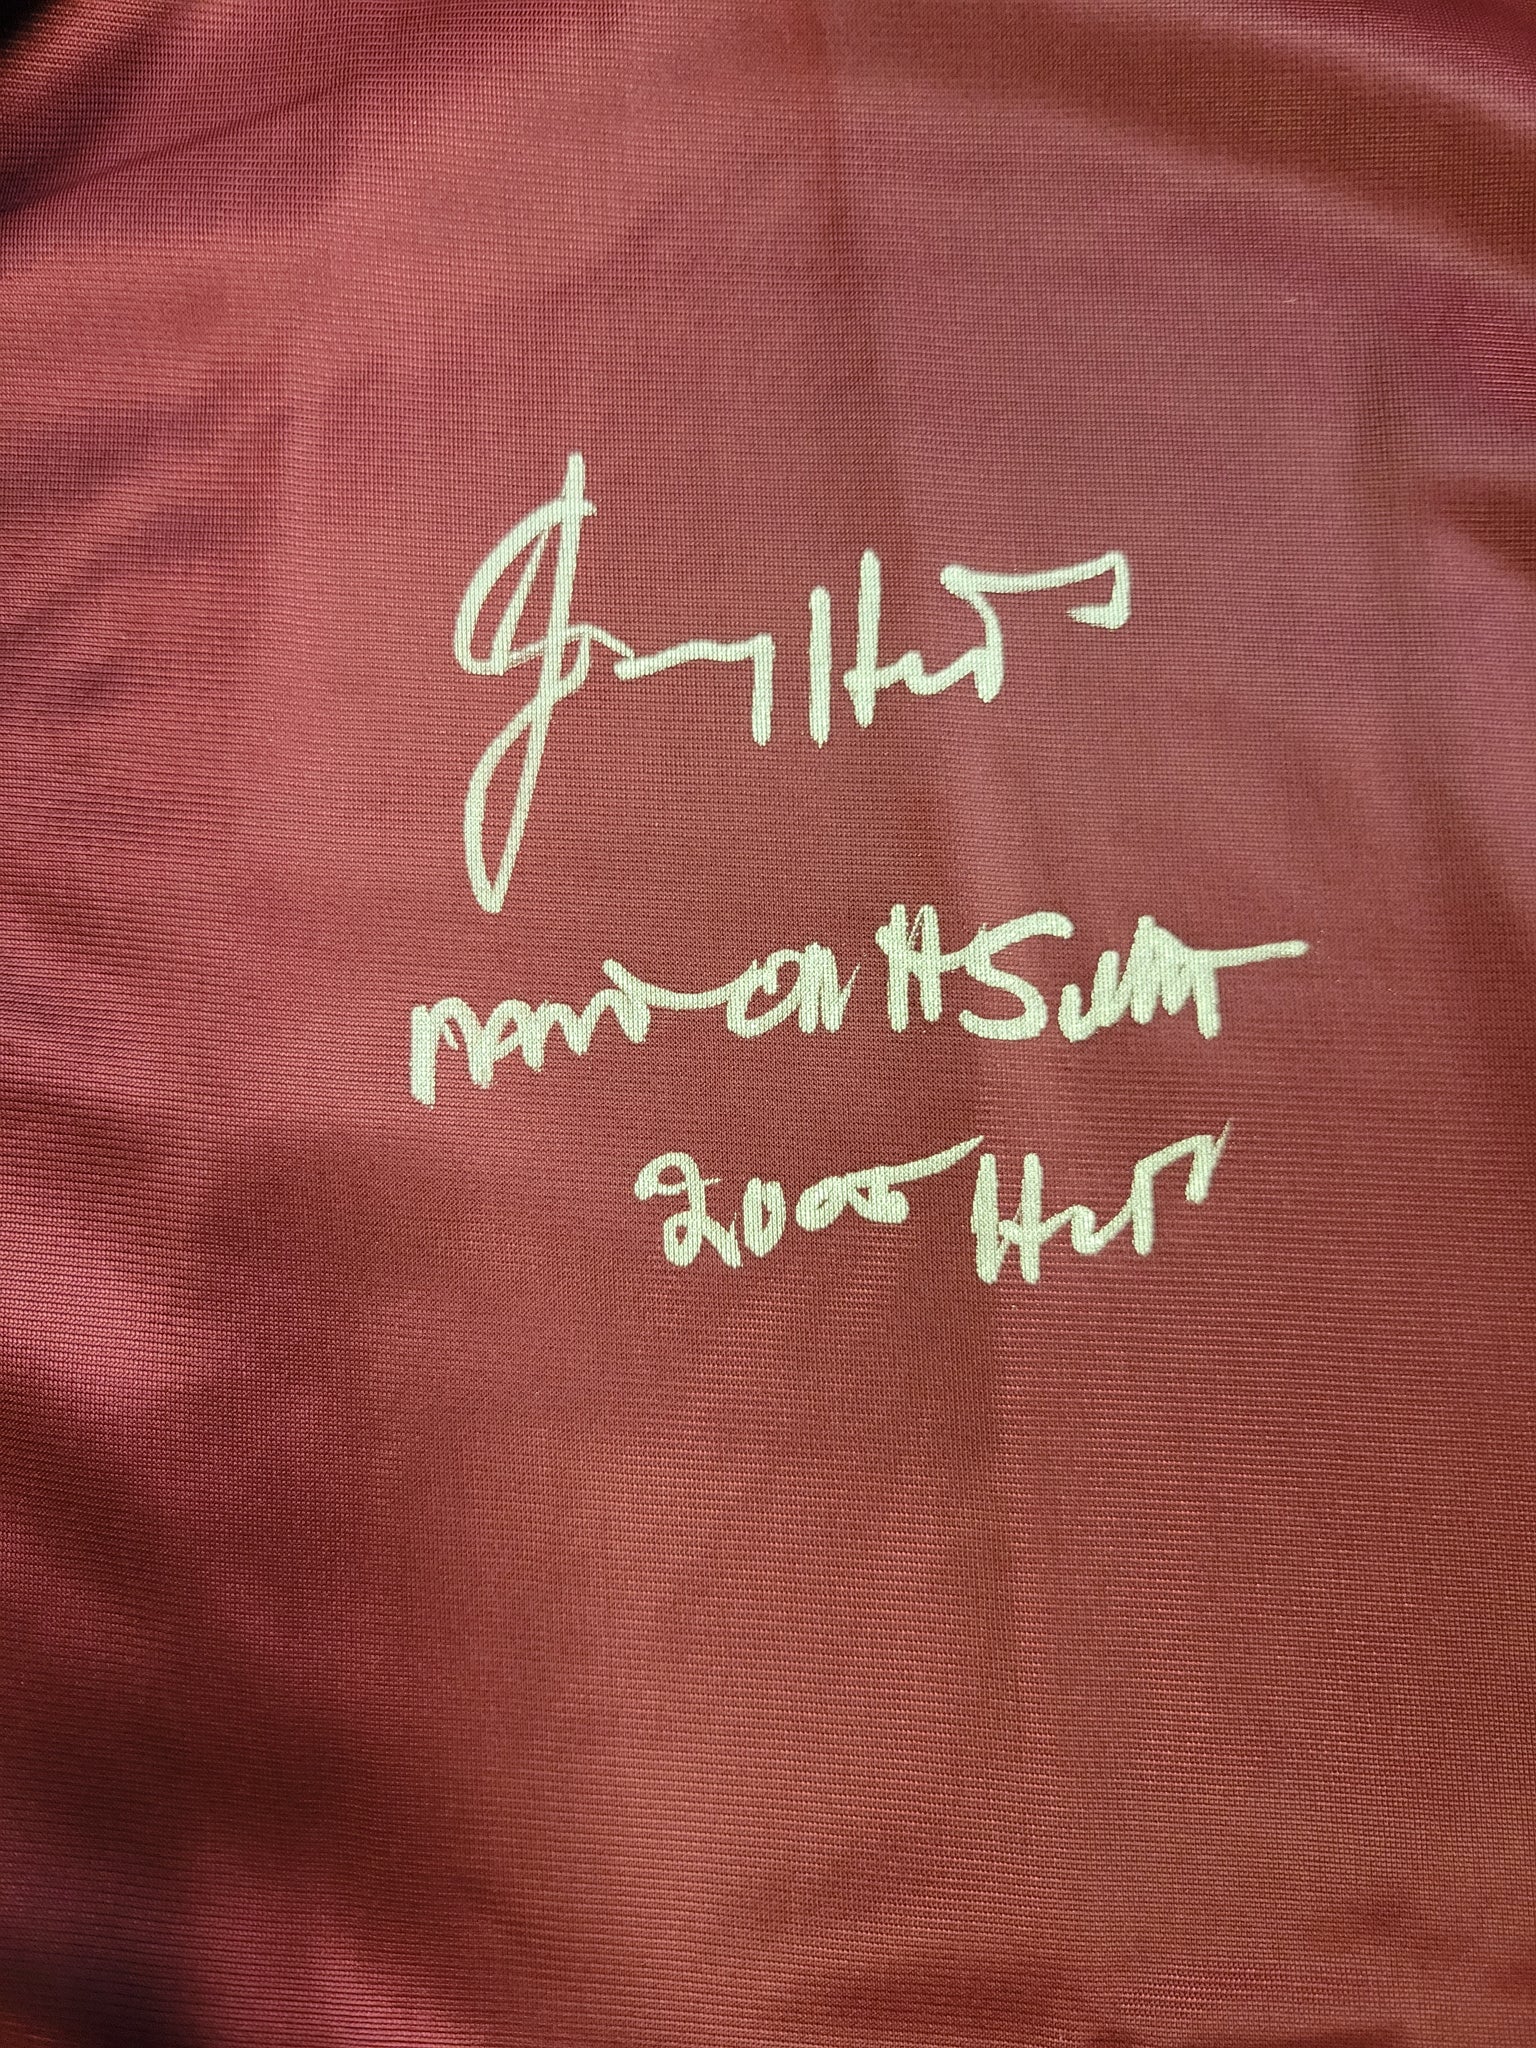 Jimmy Hart Authentic Autographed Signed Jacket JSA-